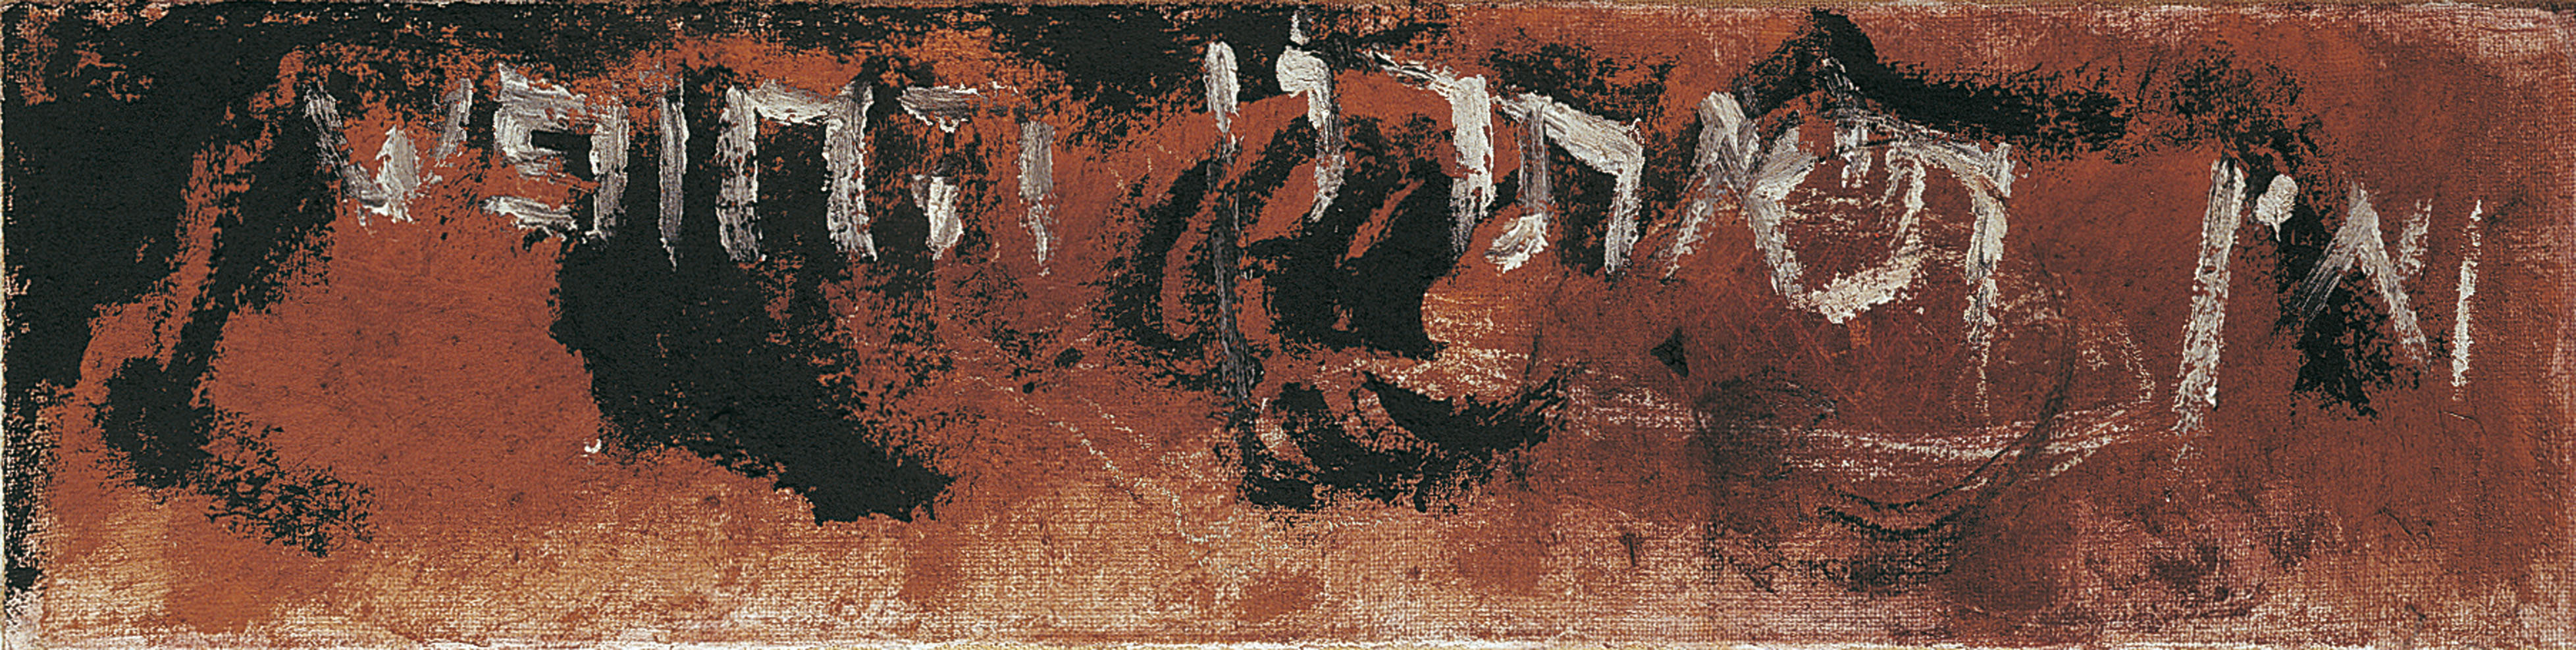 Dorit Bearach: immerwährende Dualität u. Juliano Mar, 2011, Mischtechnik auf Leinwand, 25 x 100 cm